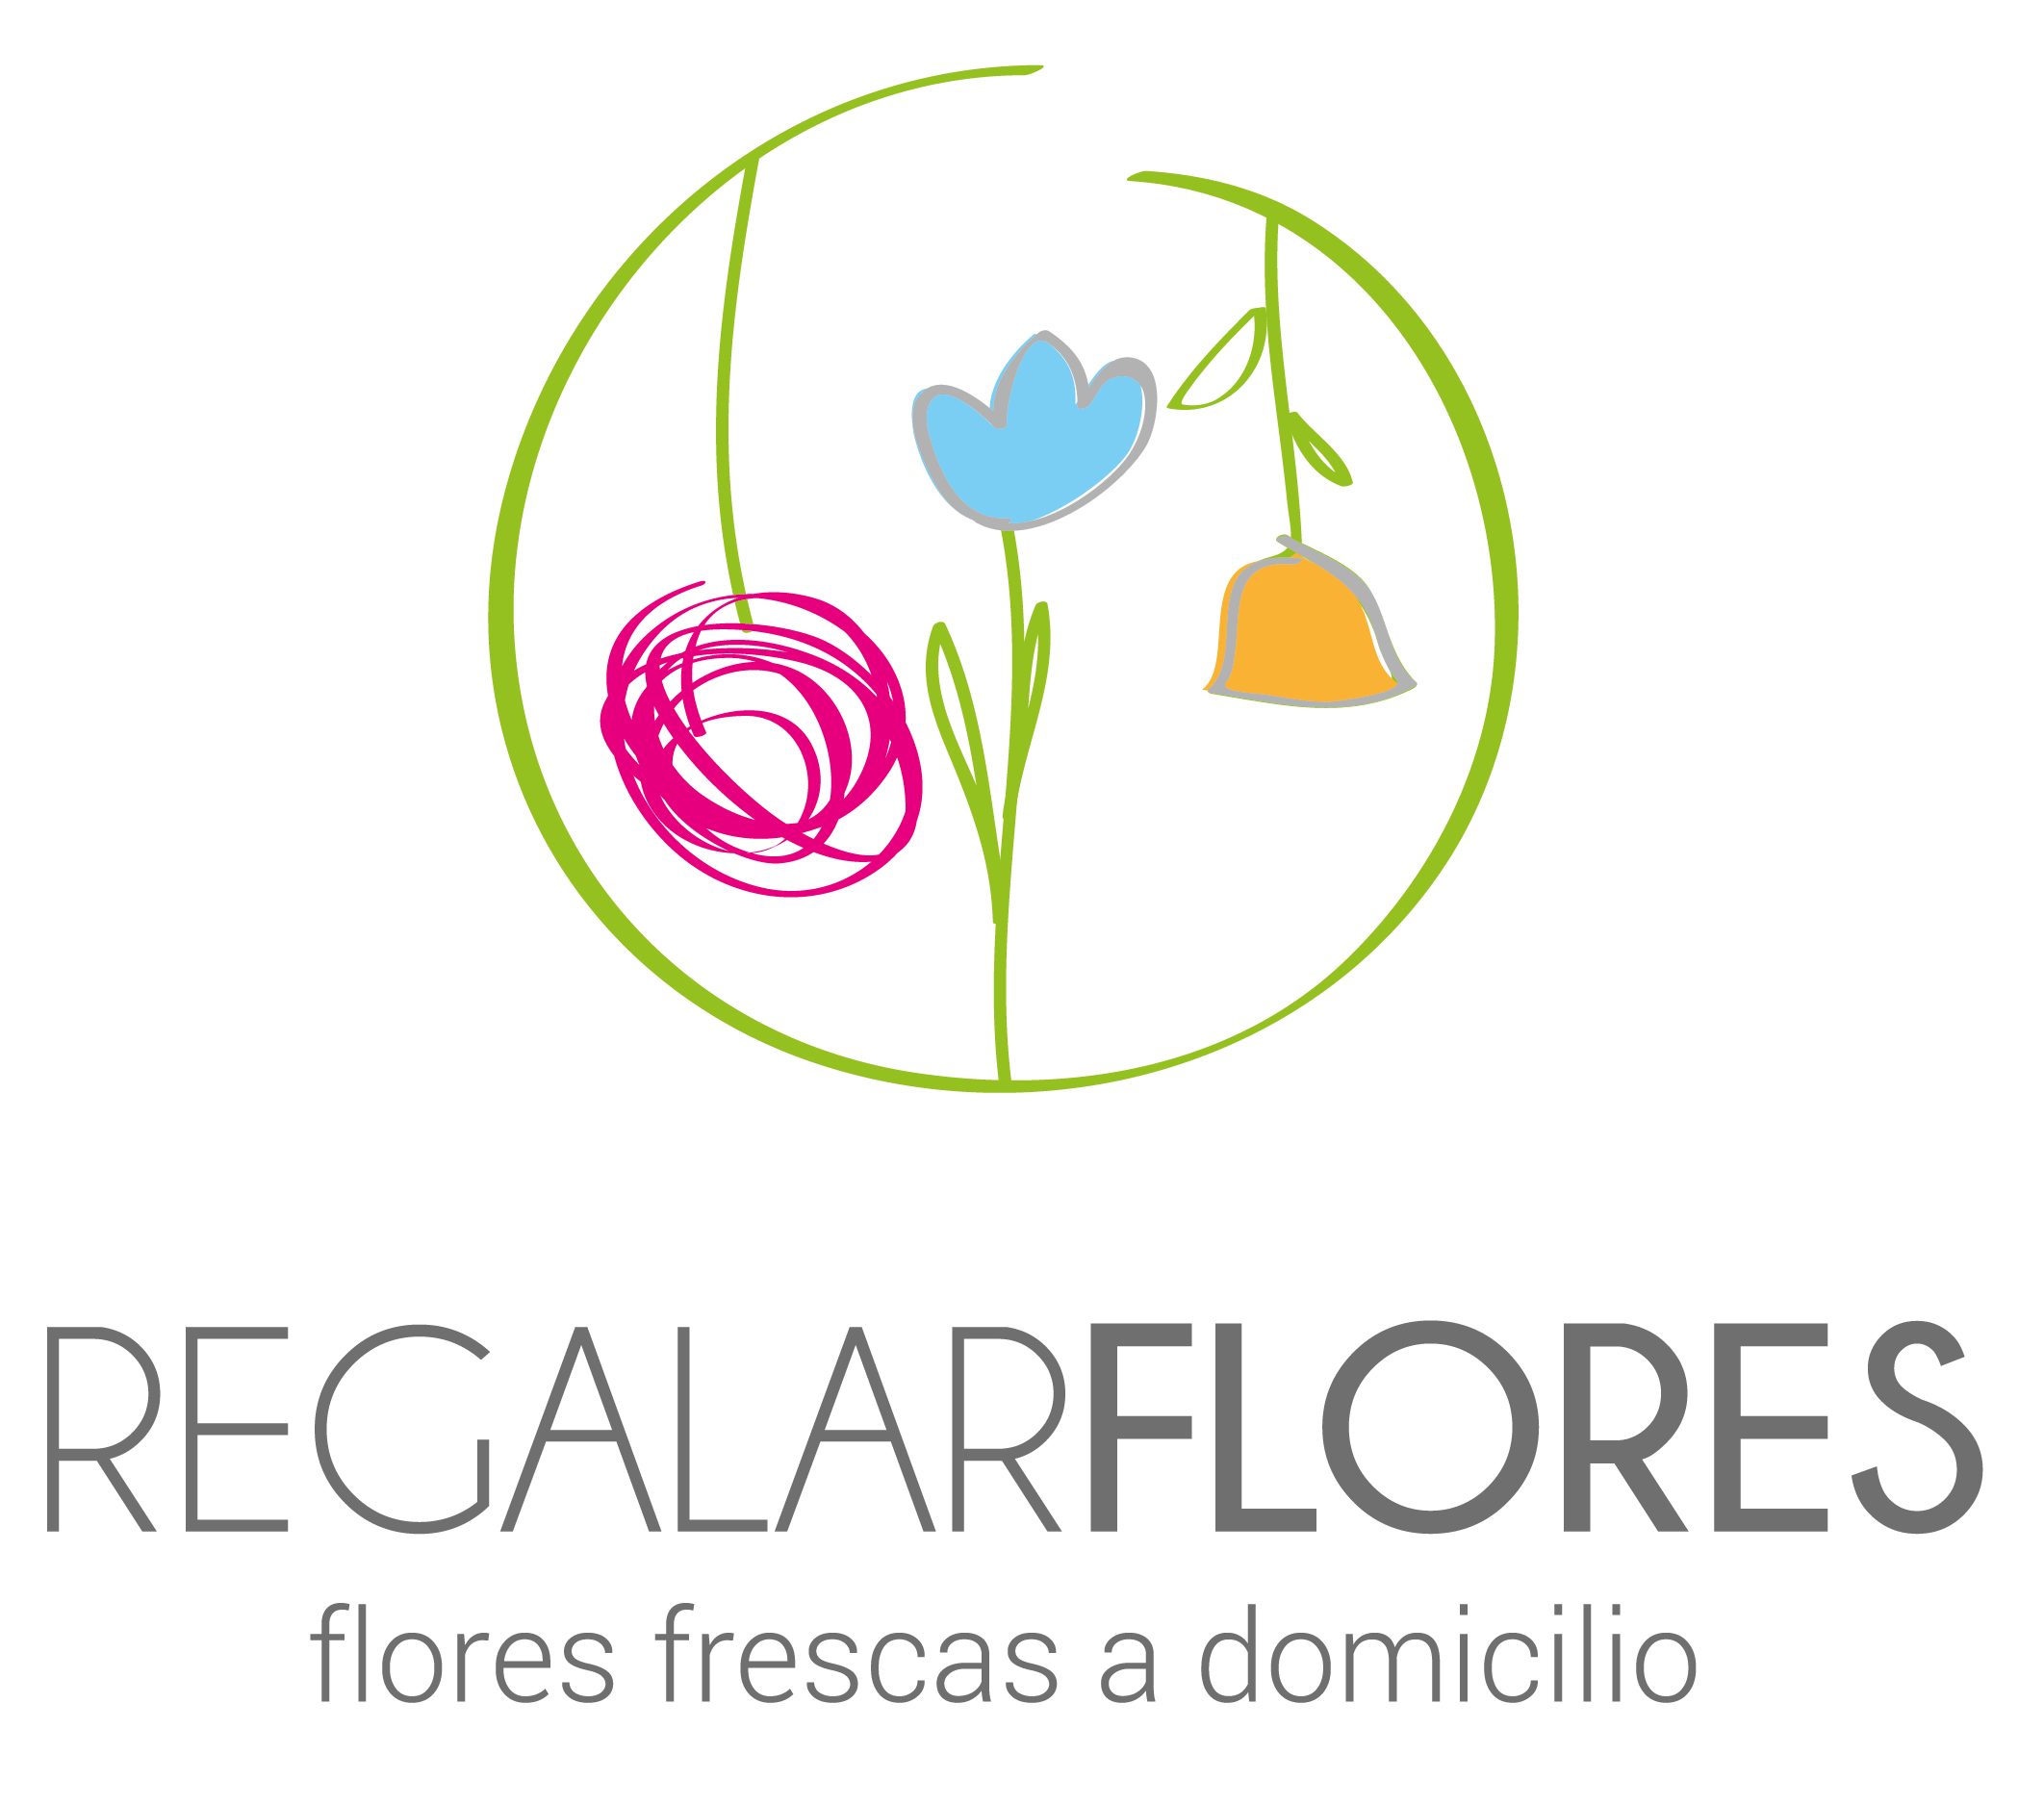 RegalarFlores.net